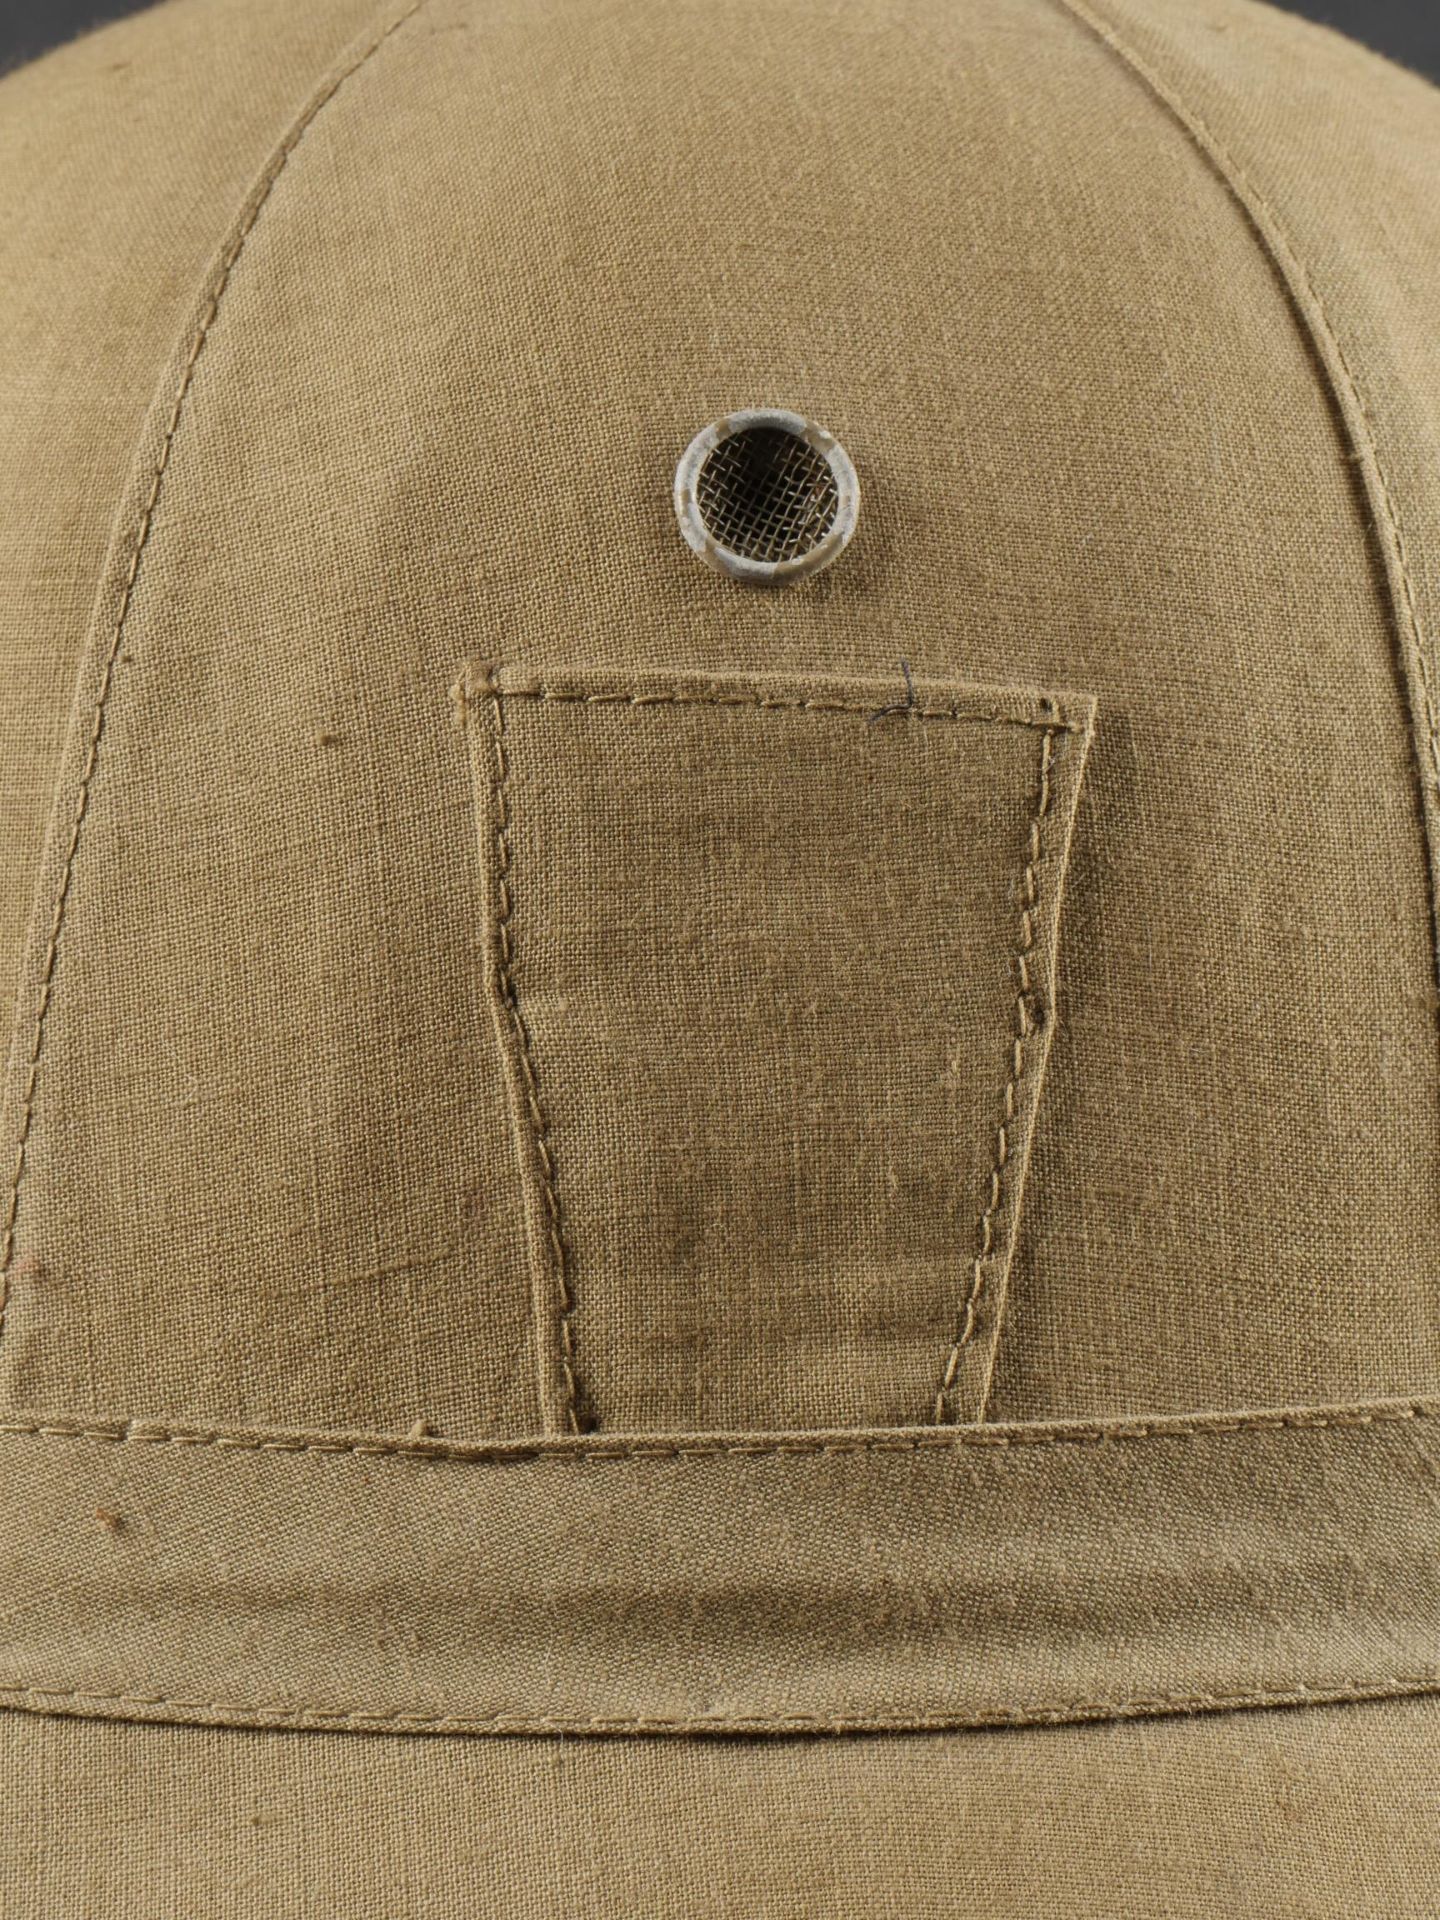 Casque tropicale du 53eme Regiment dInfanterie. Tropical helmet of the 53rd Infantry Regiment. - Image 11 of 19